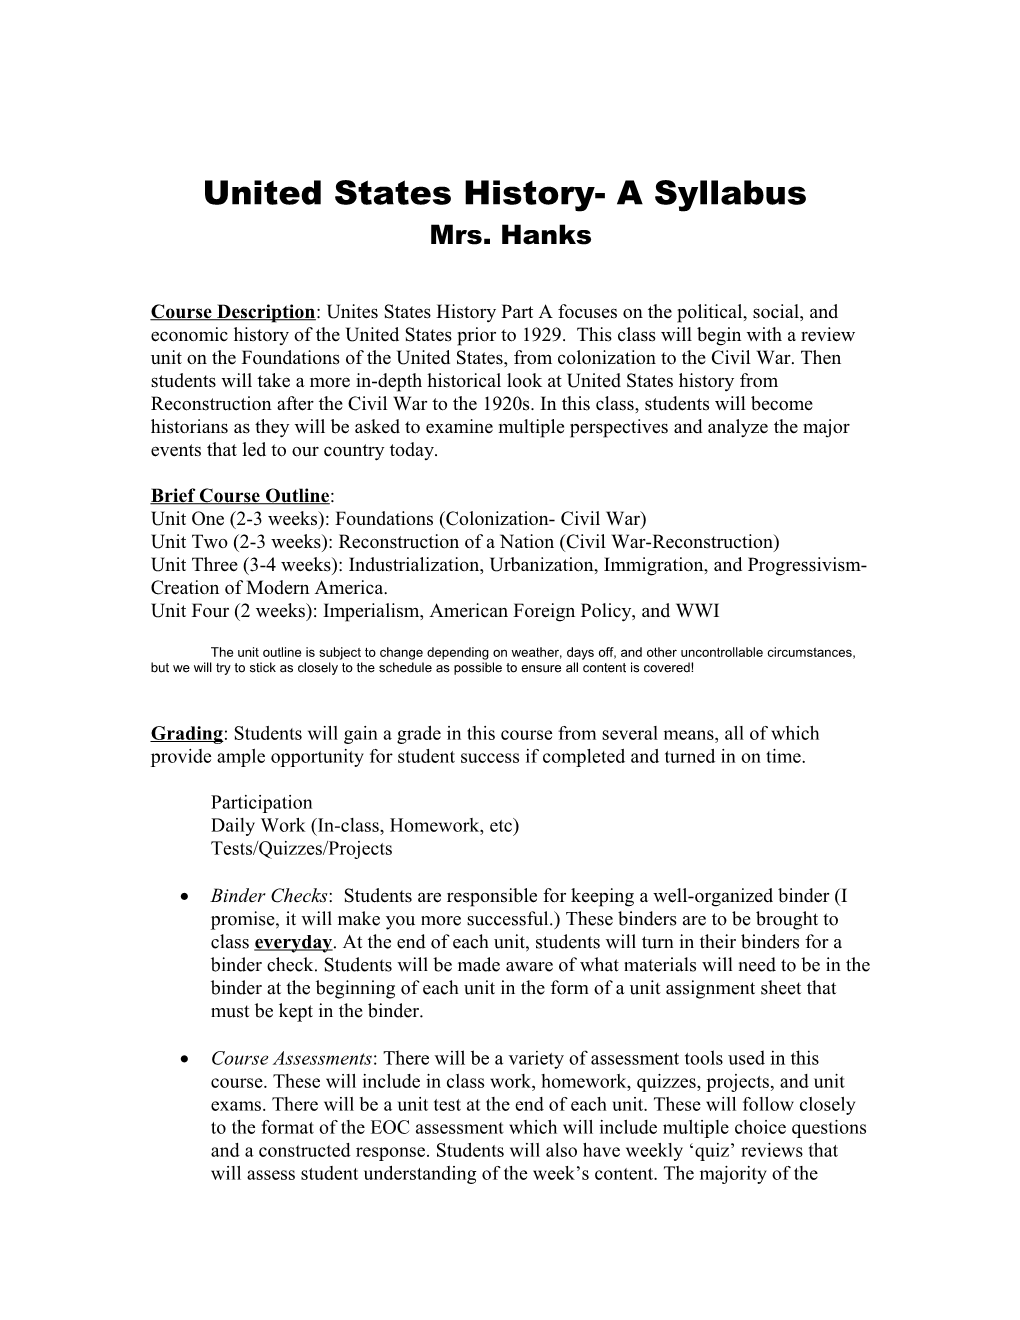 United States History- a Syllabus